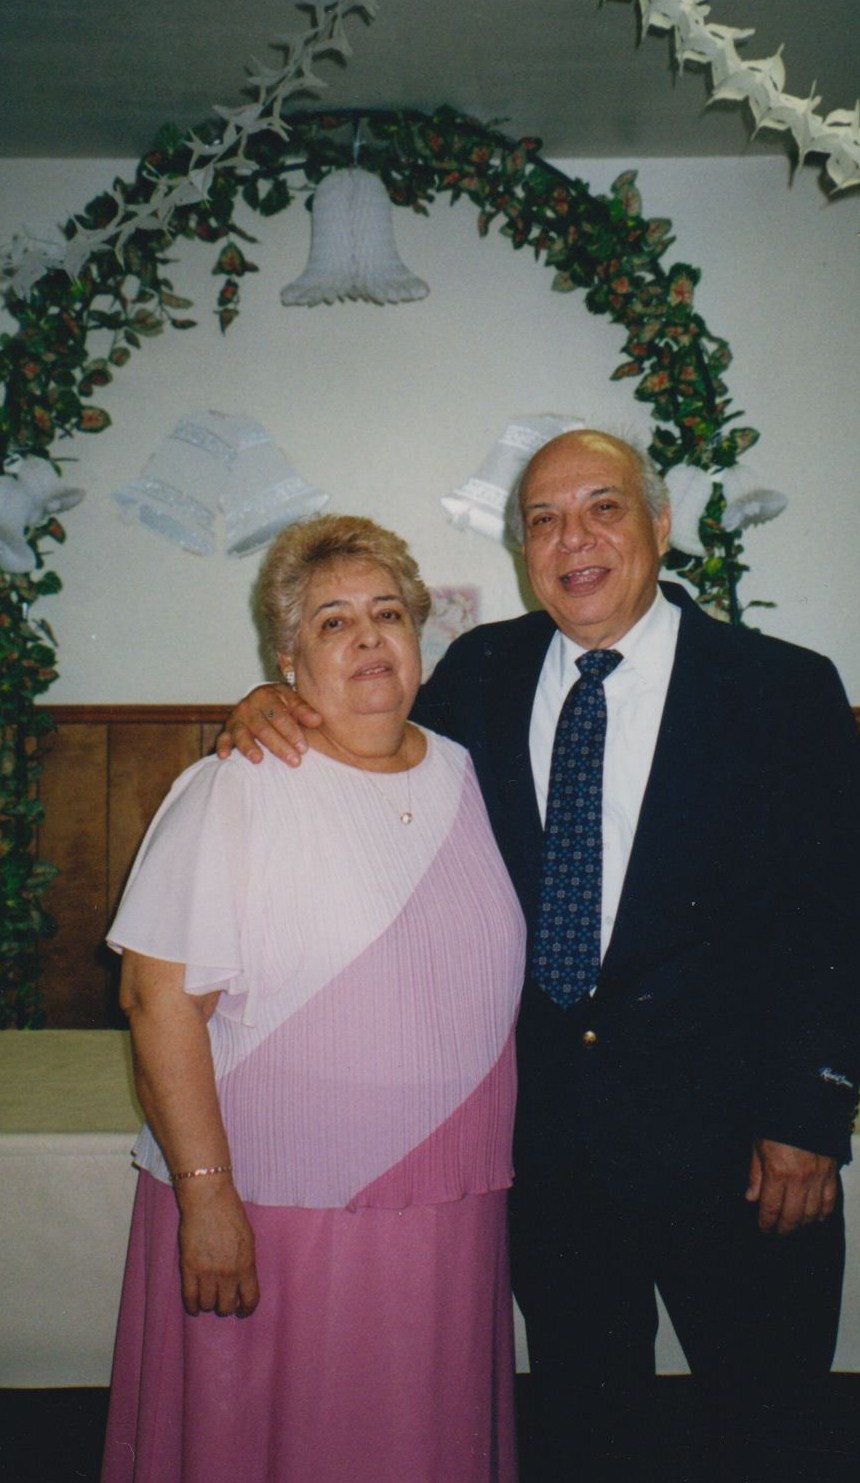 Luis Velez's Online Memorial & Obituary